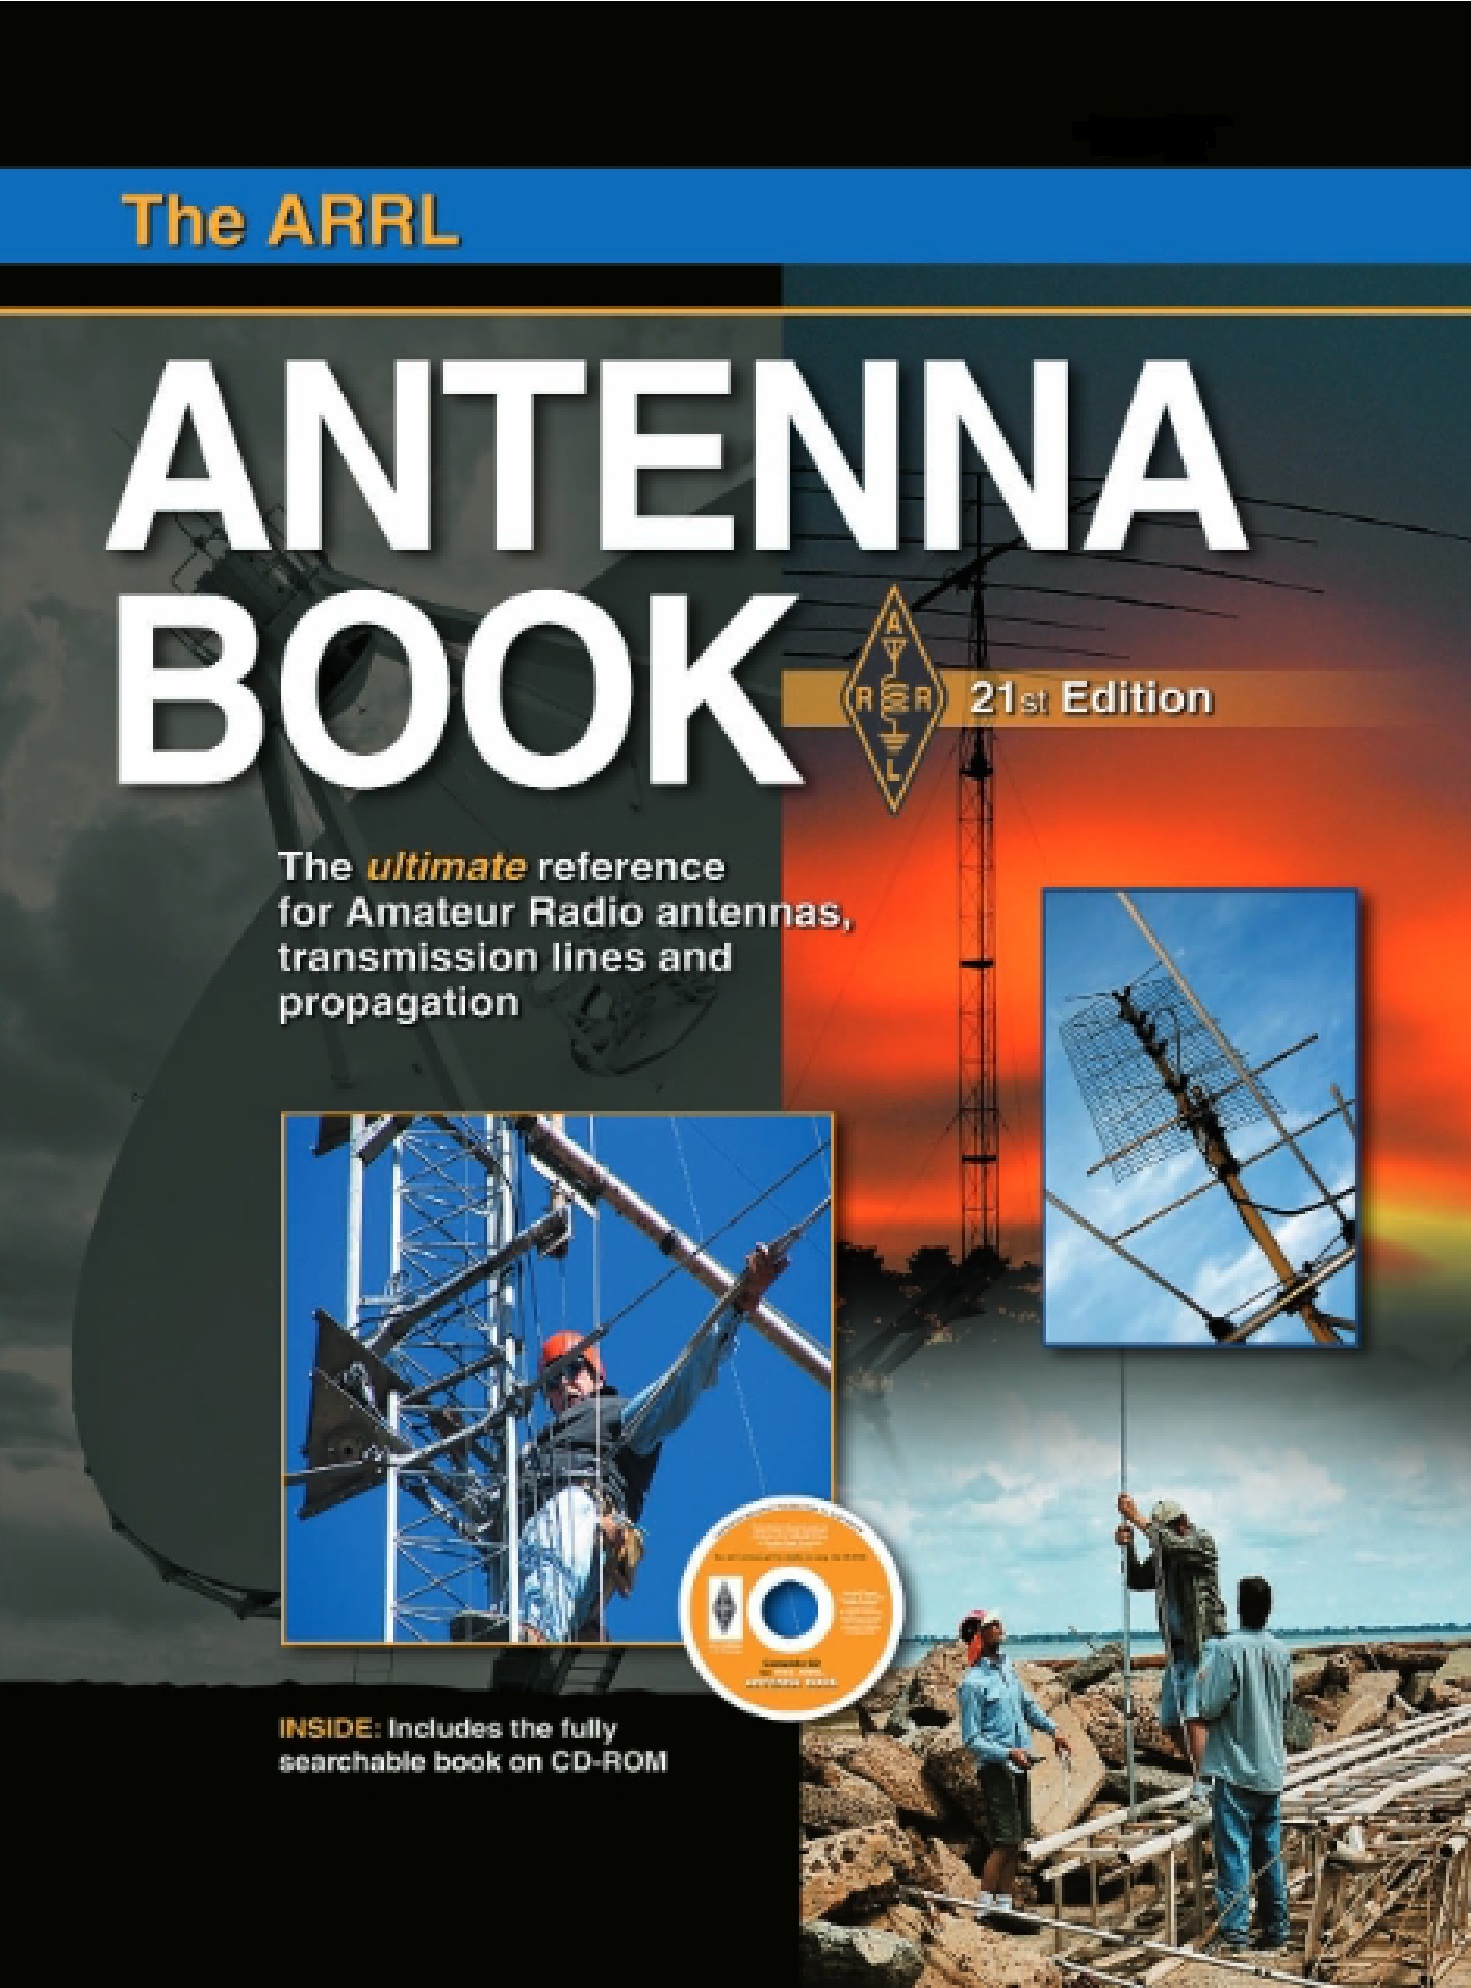 The ARRL Antenna Book 21.st Edition